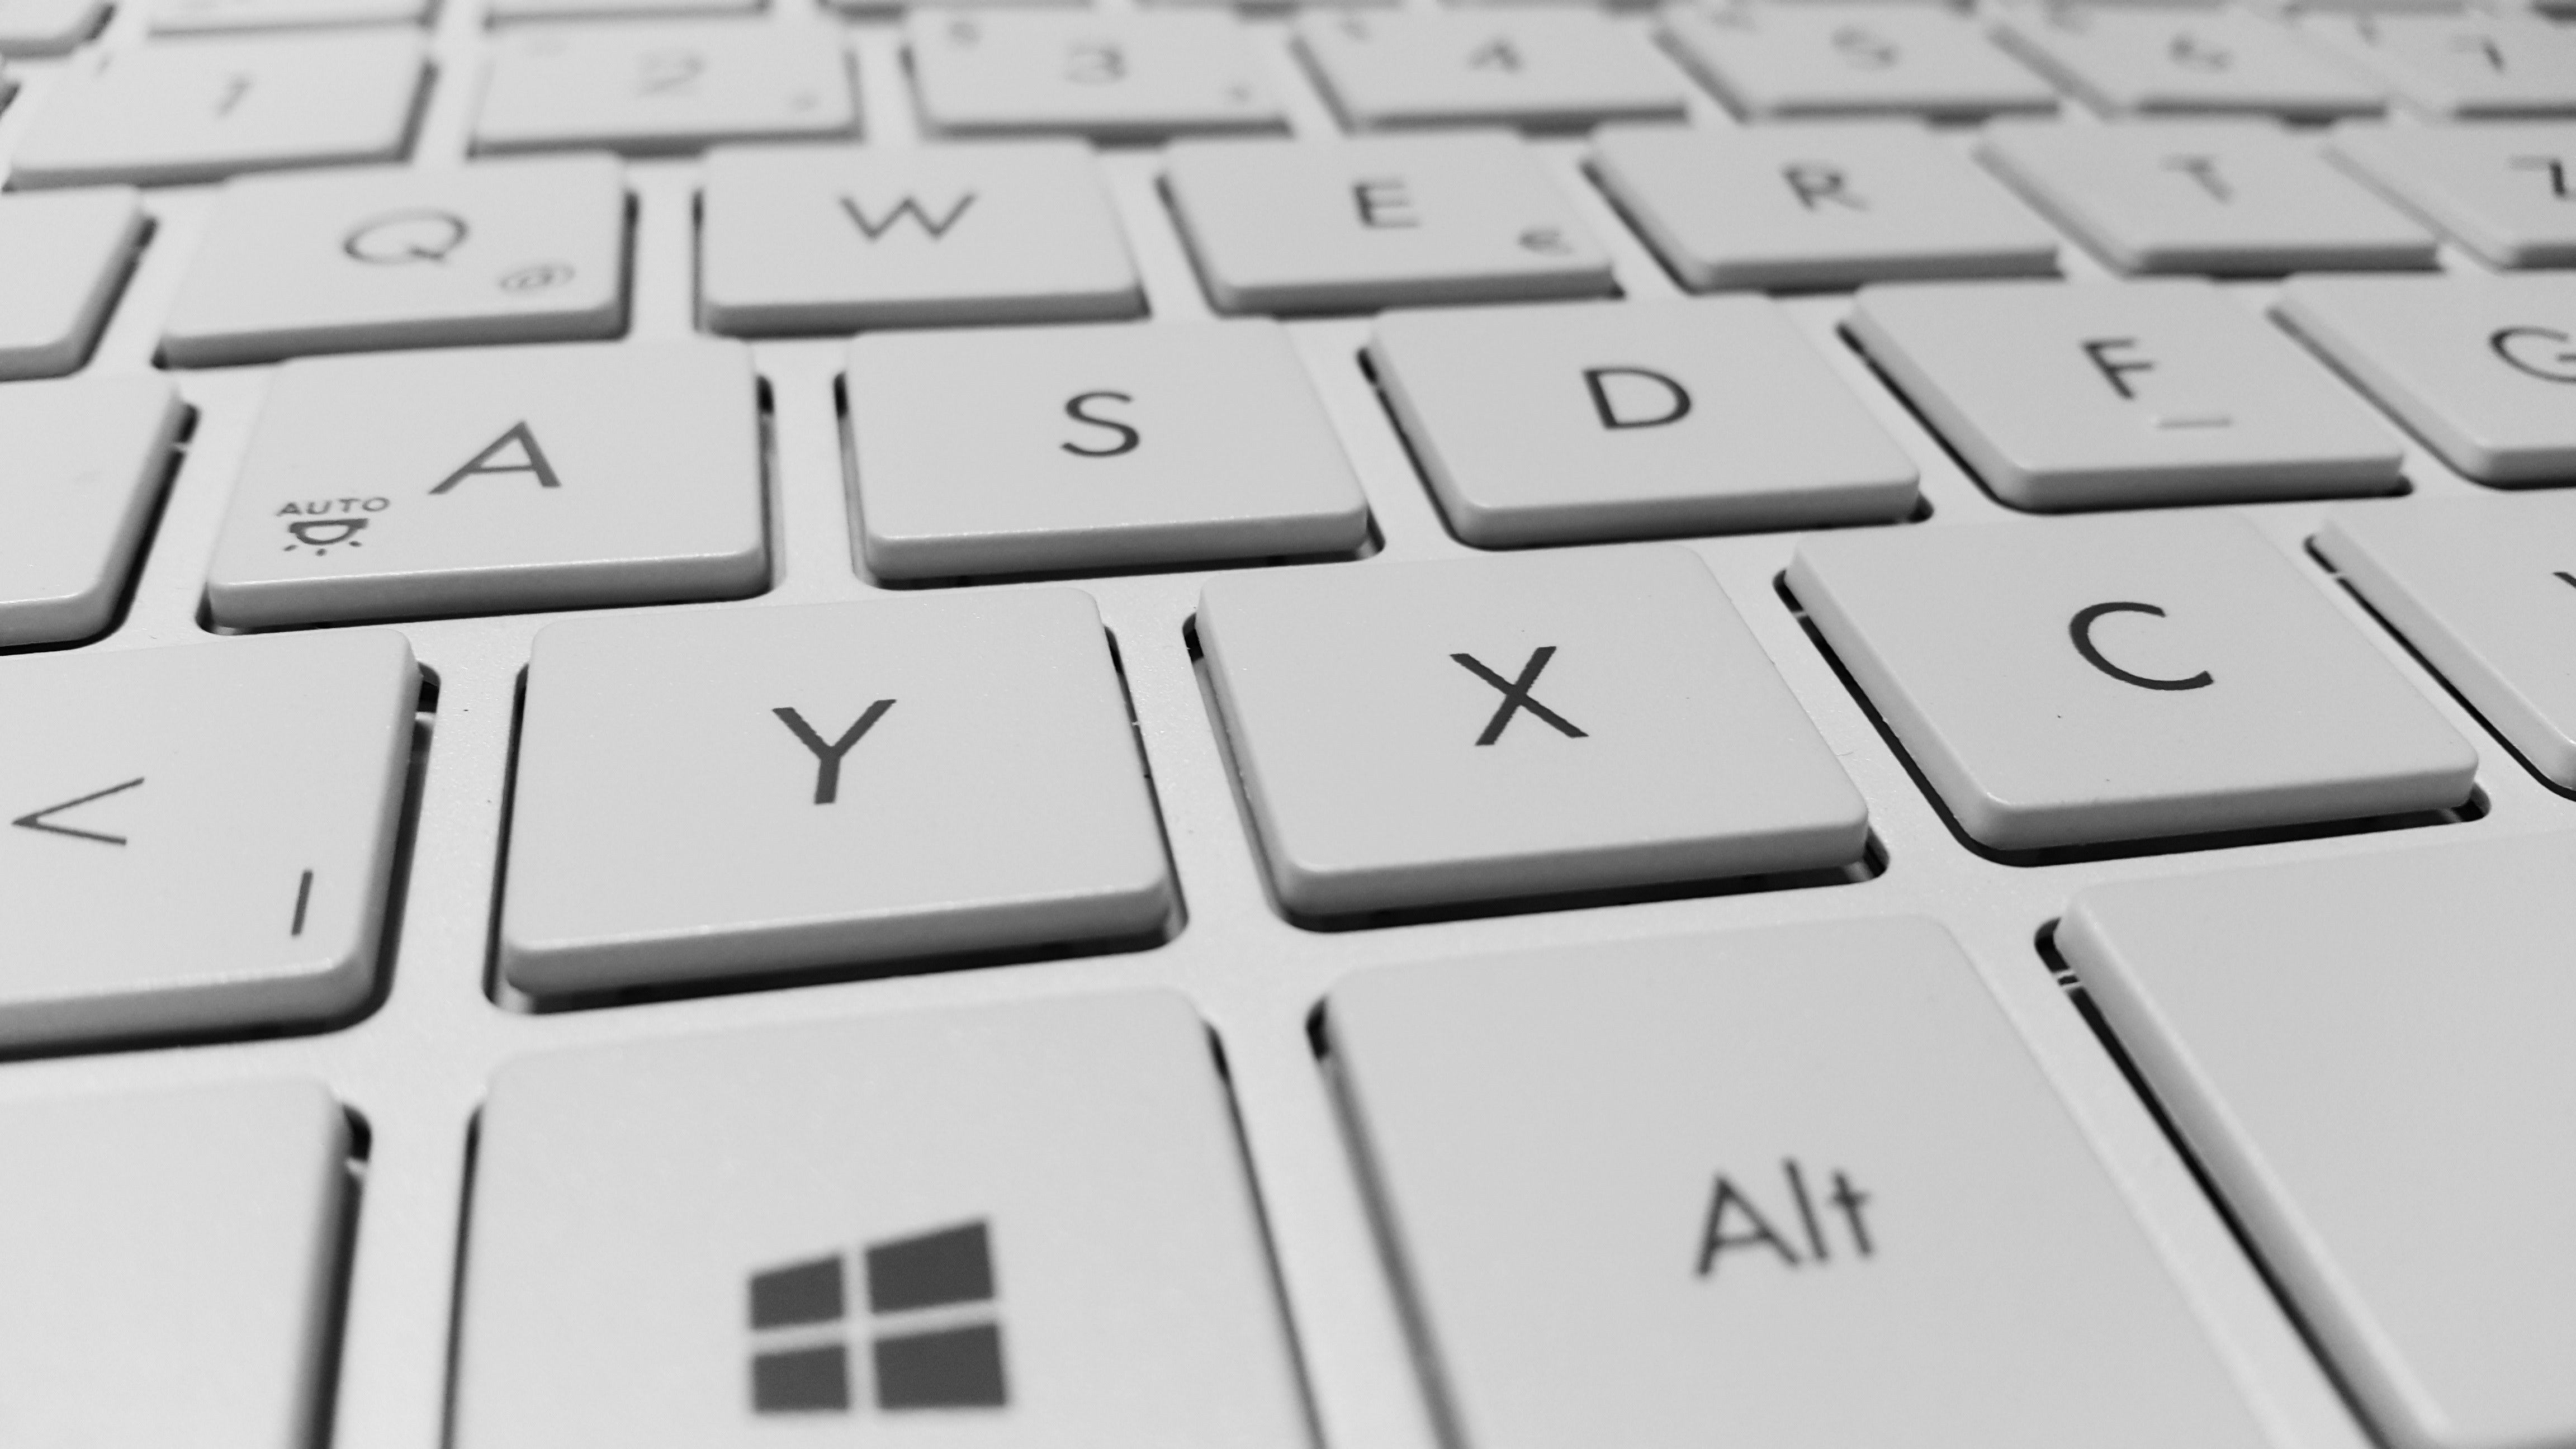 keyboard with Windows key